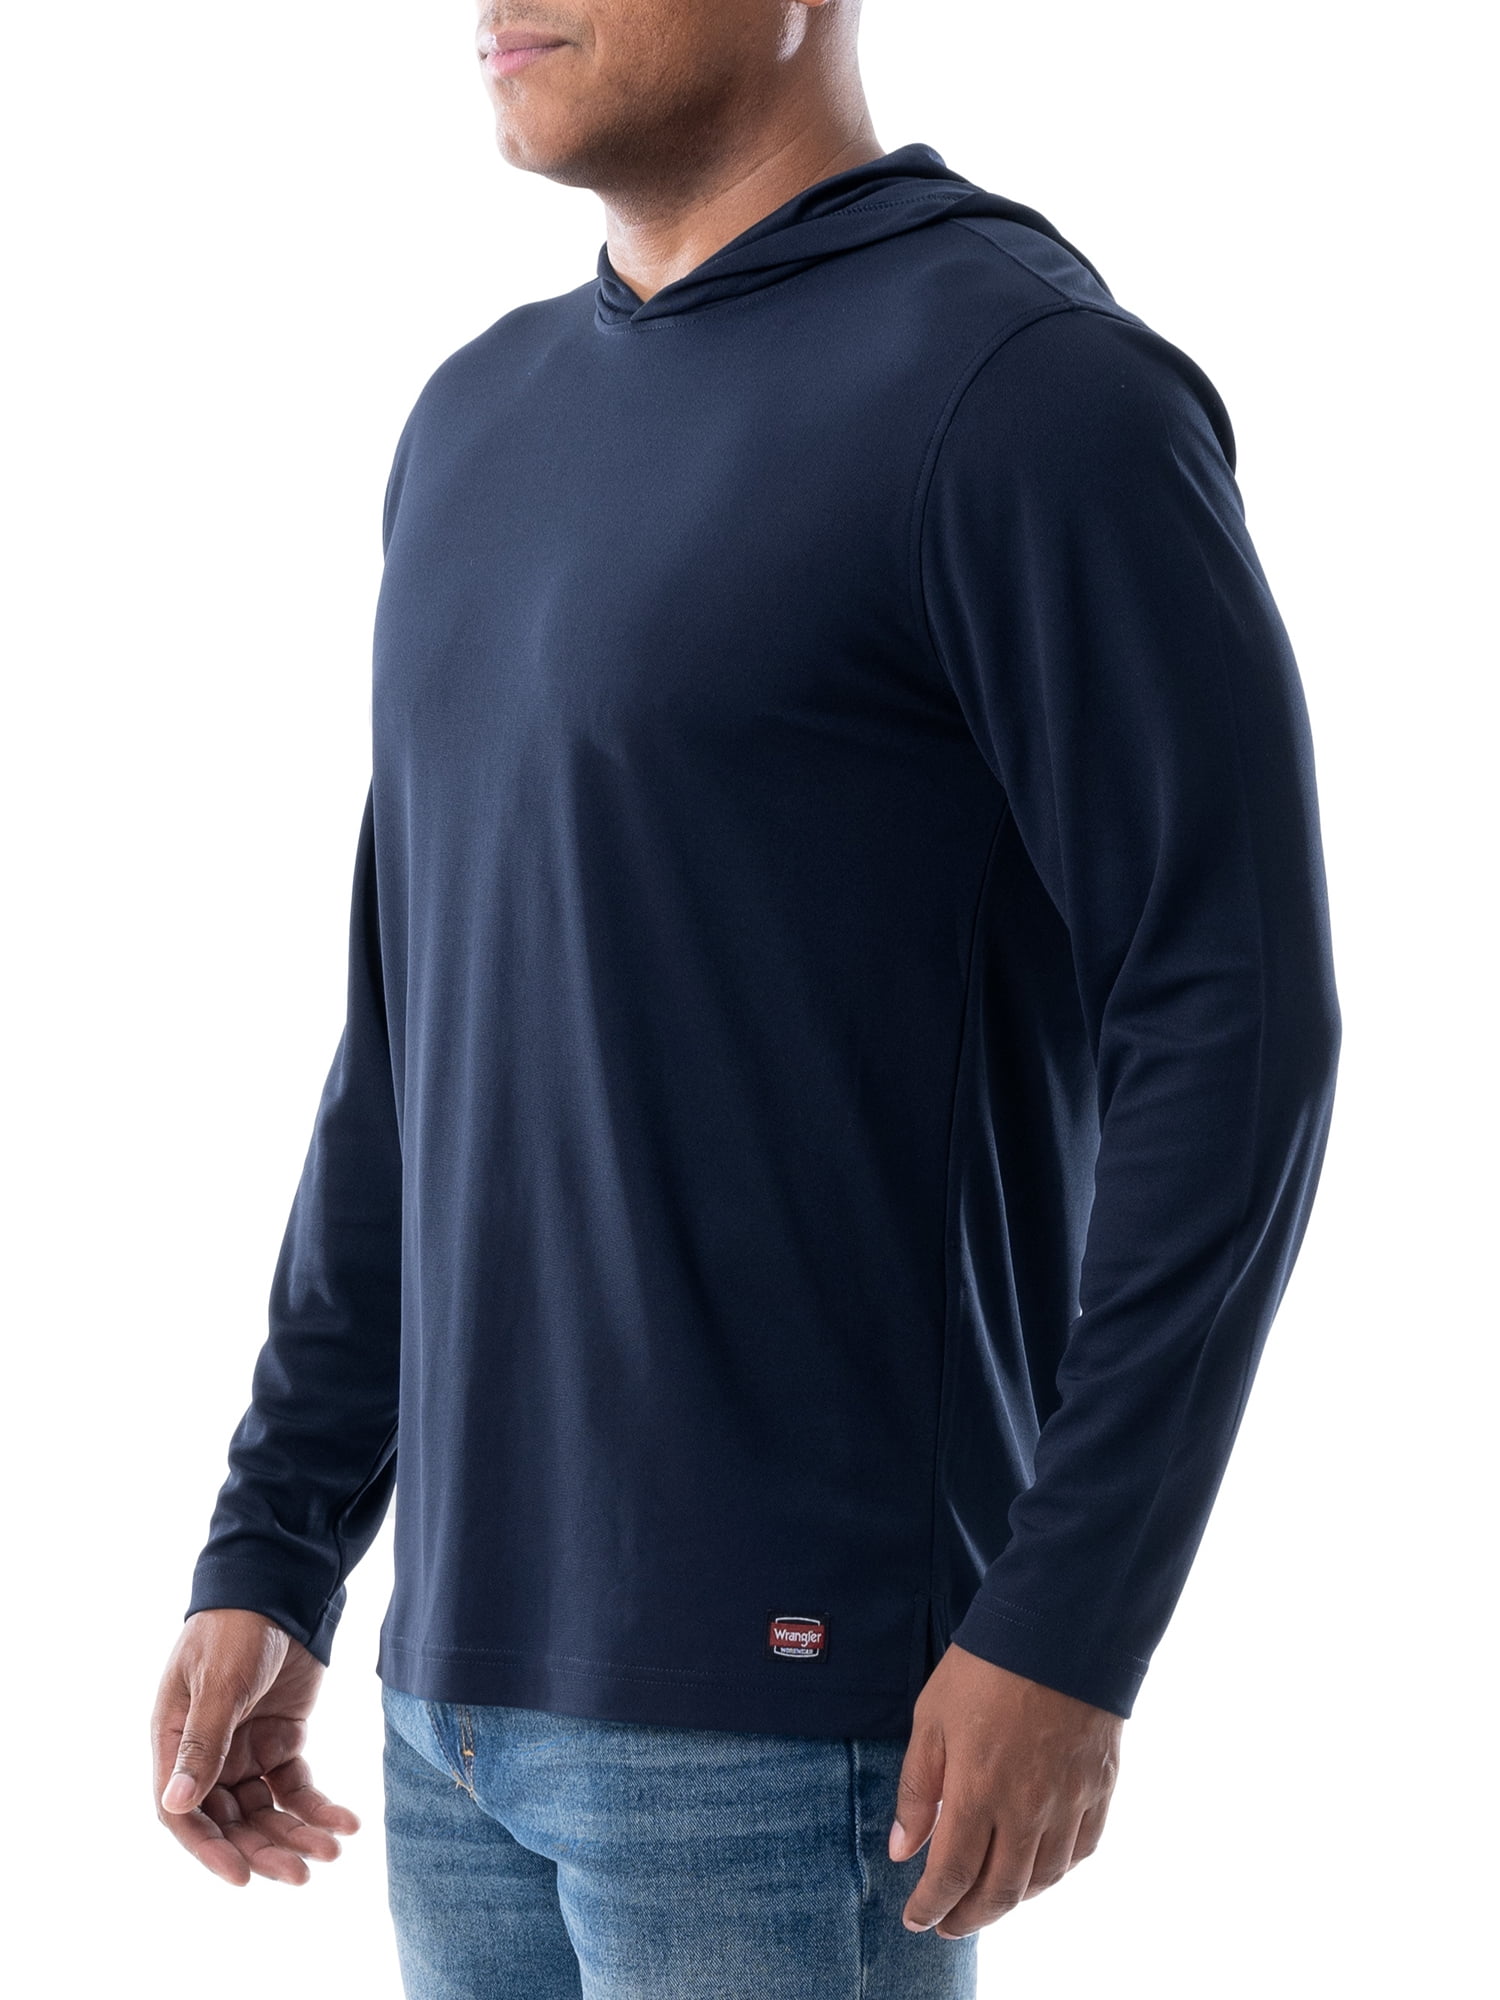 Wrangler Workwear Men's Long Sleeve UPF 40 Sun Shirt with